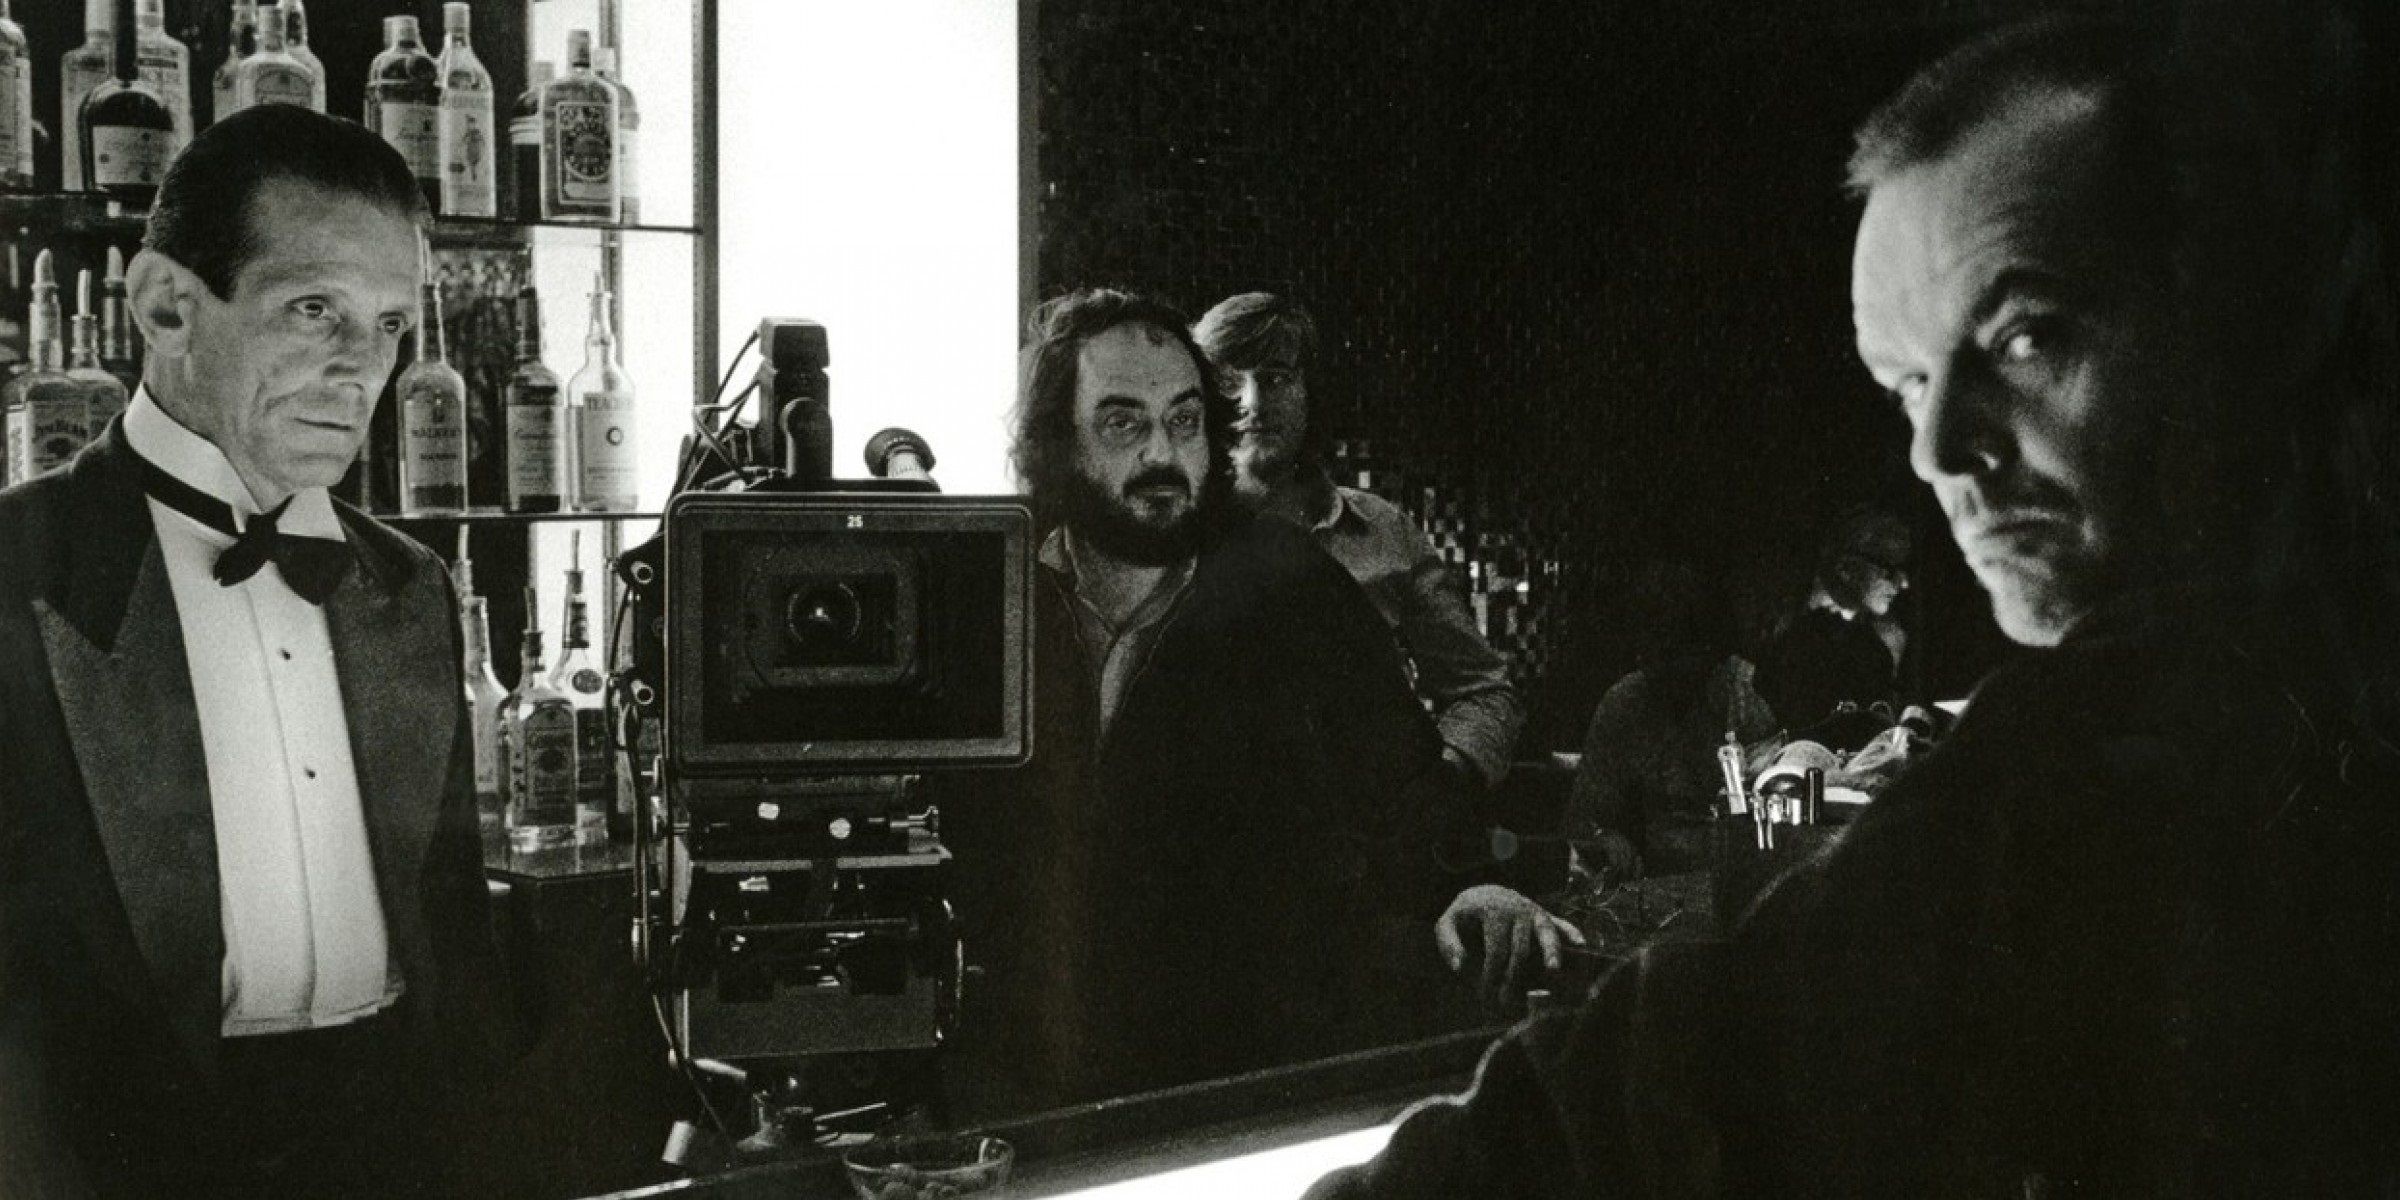 Stanley Kubrick directing The Shining